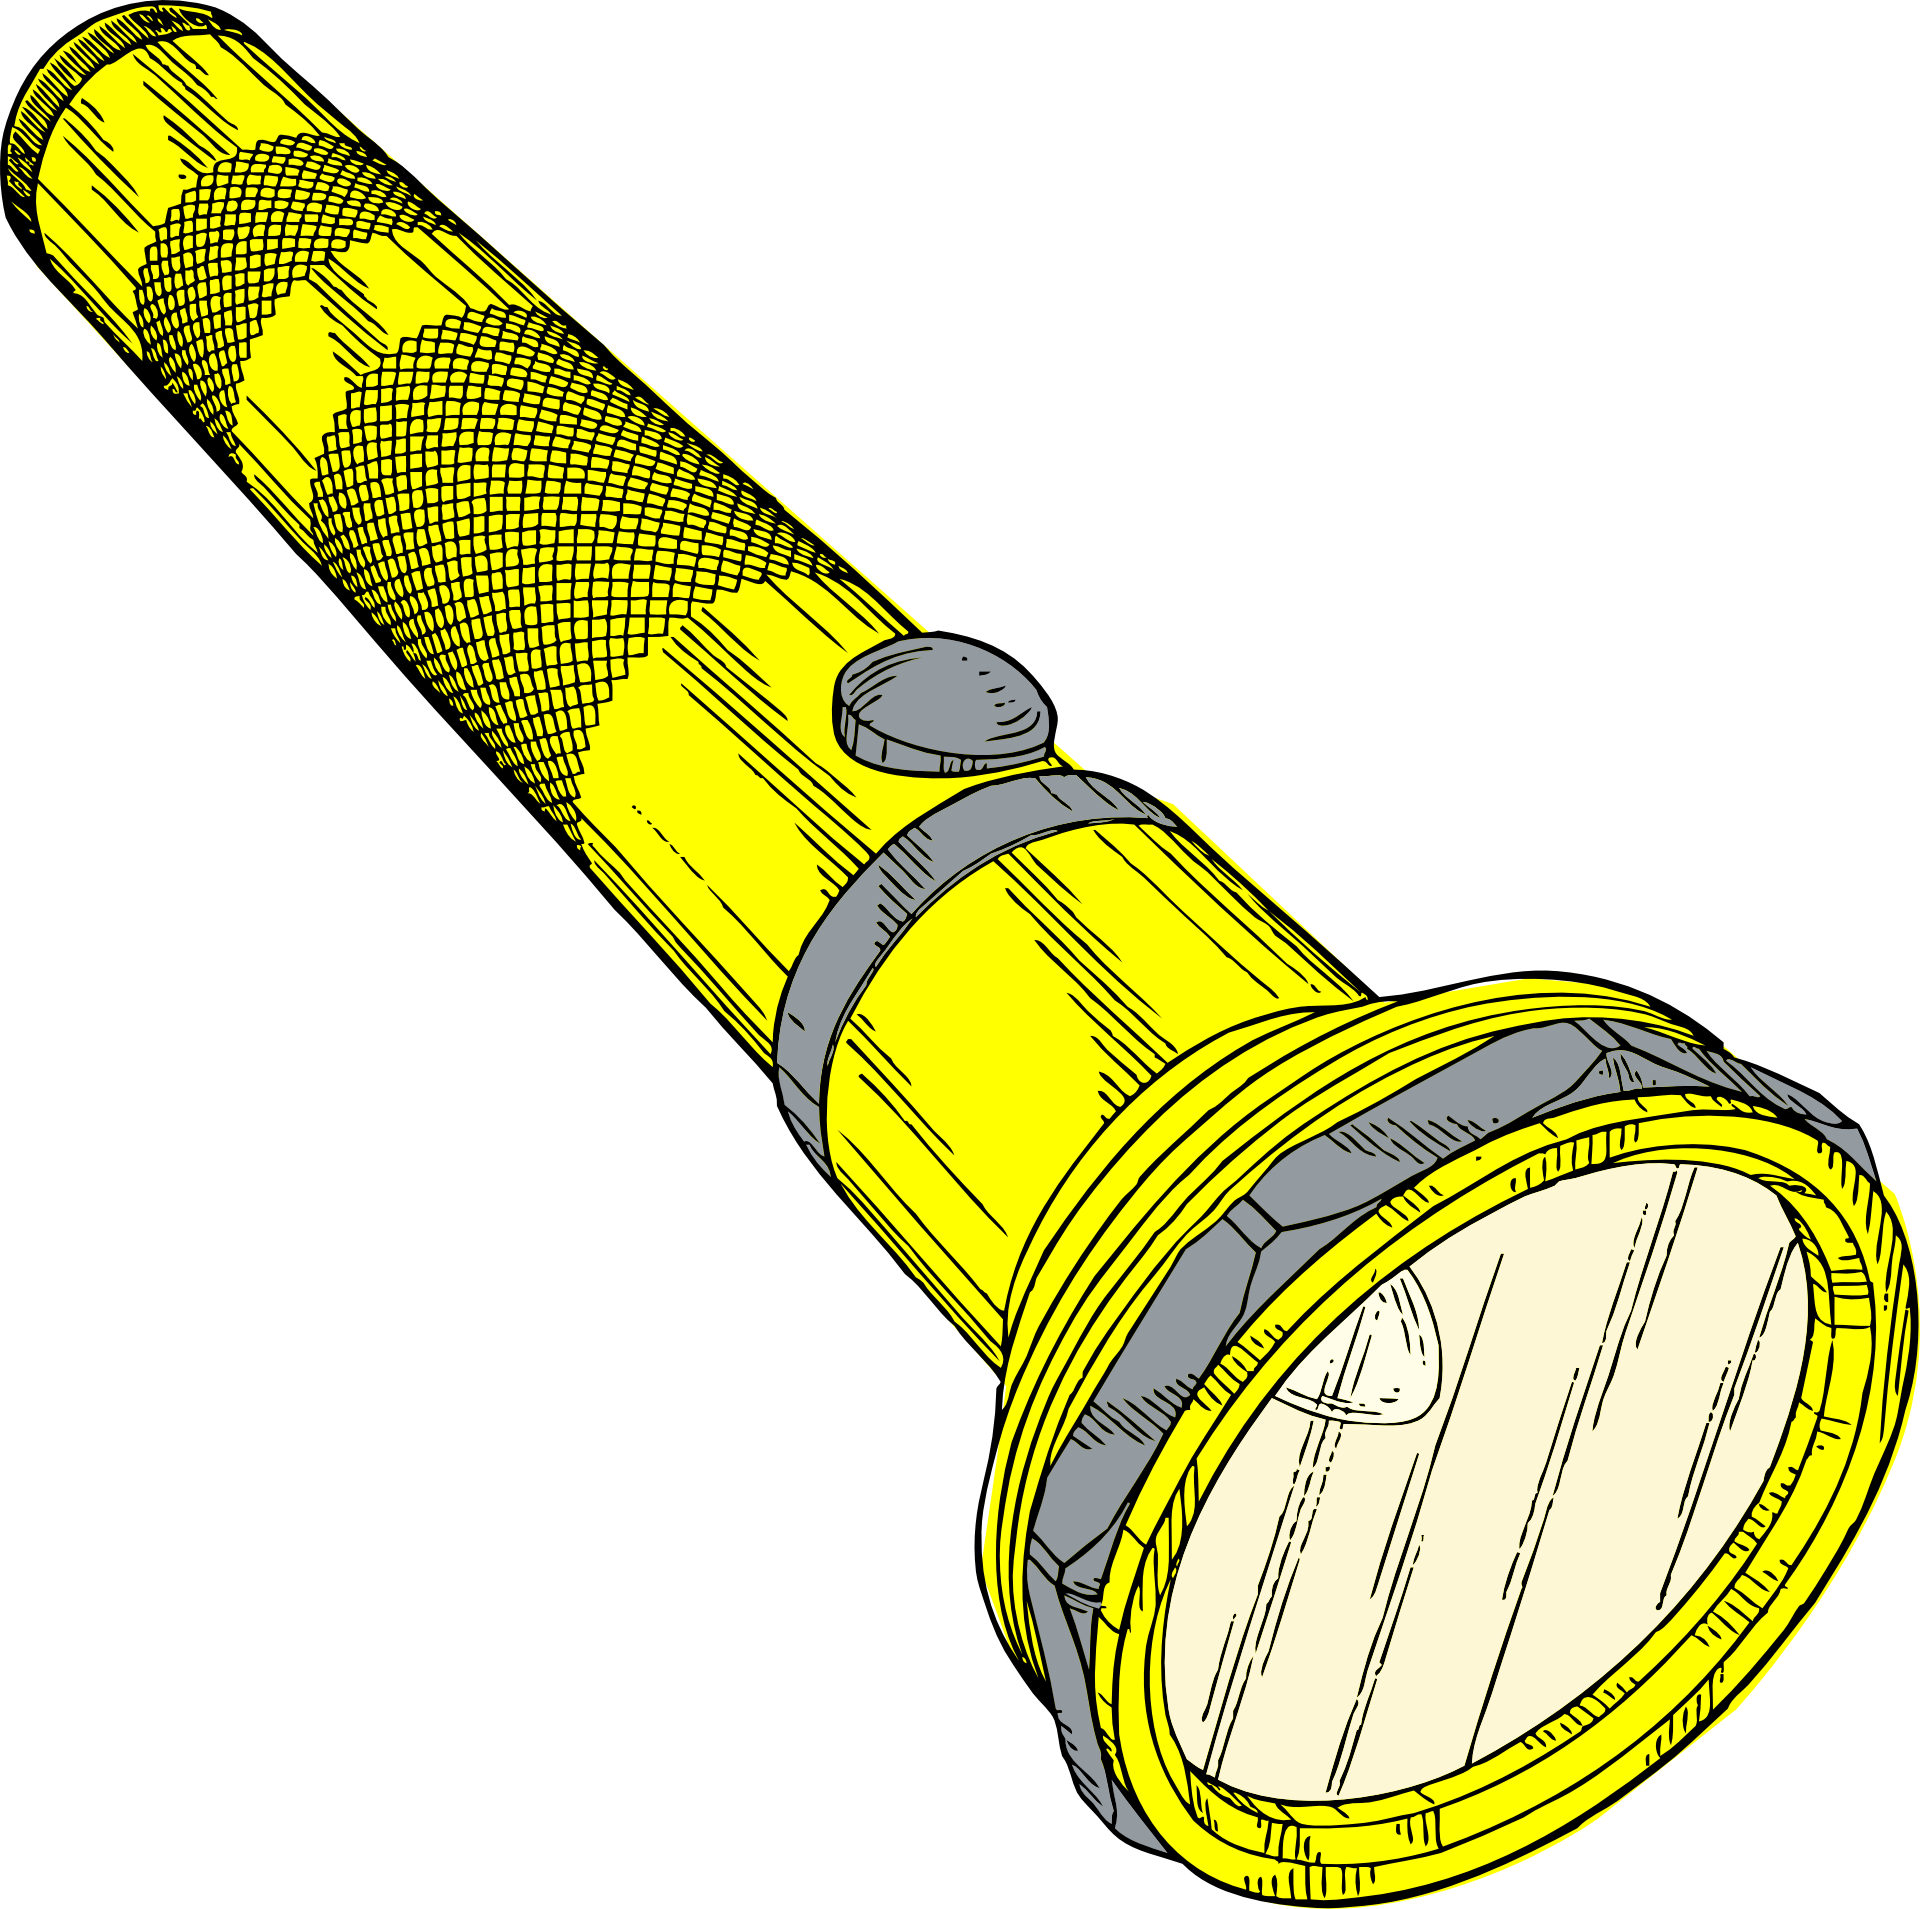 Yellow flashlight drawing free image download